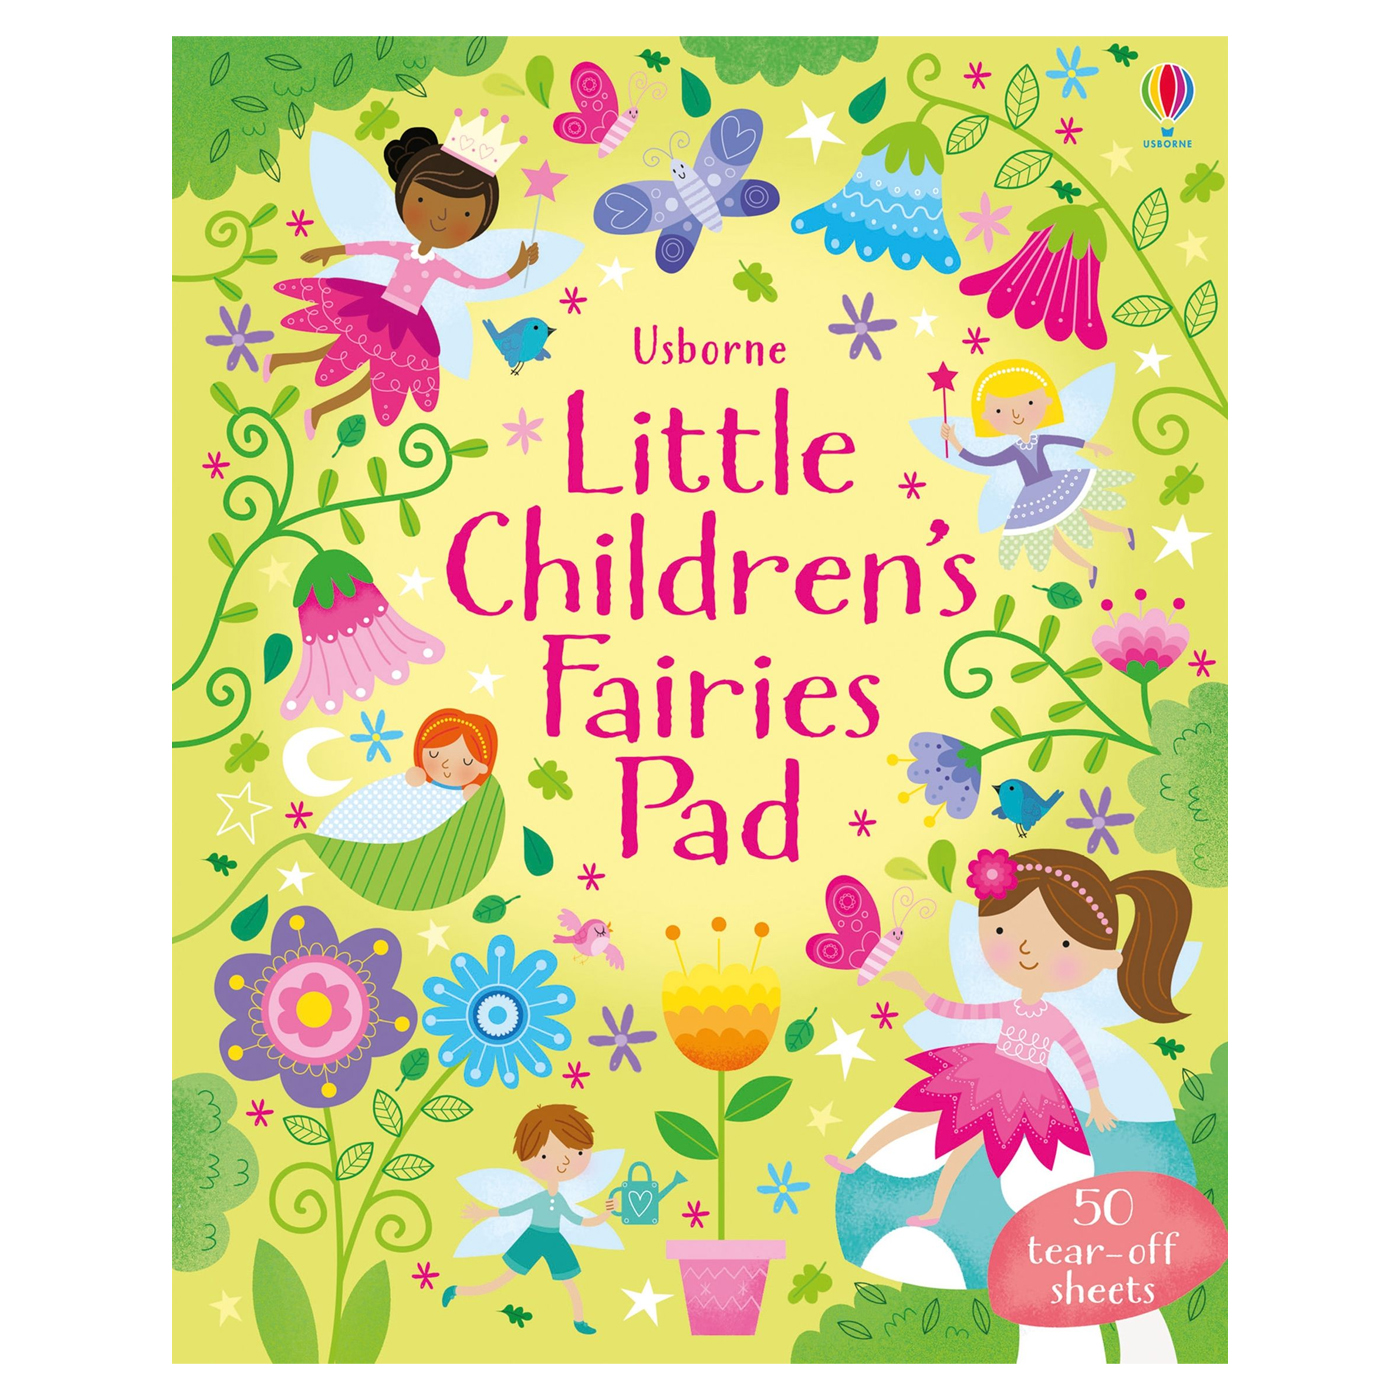  Little Children's Fairies Pad